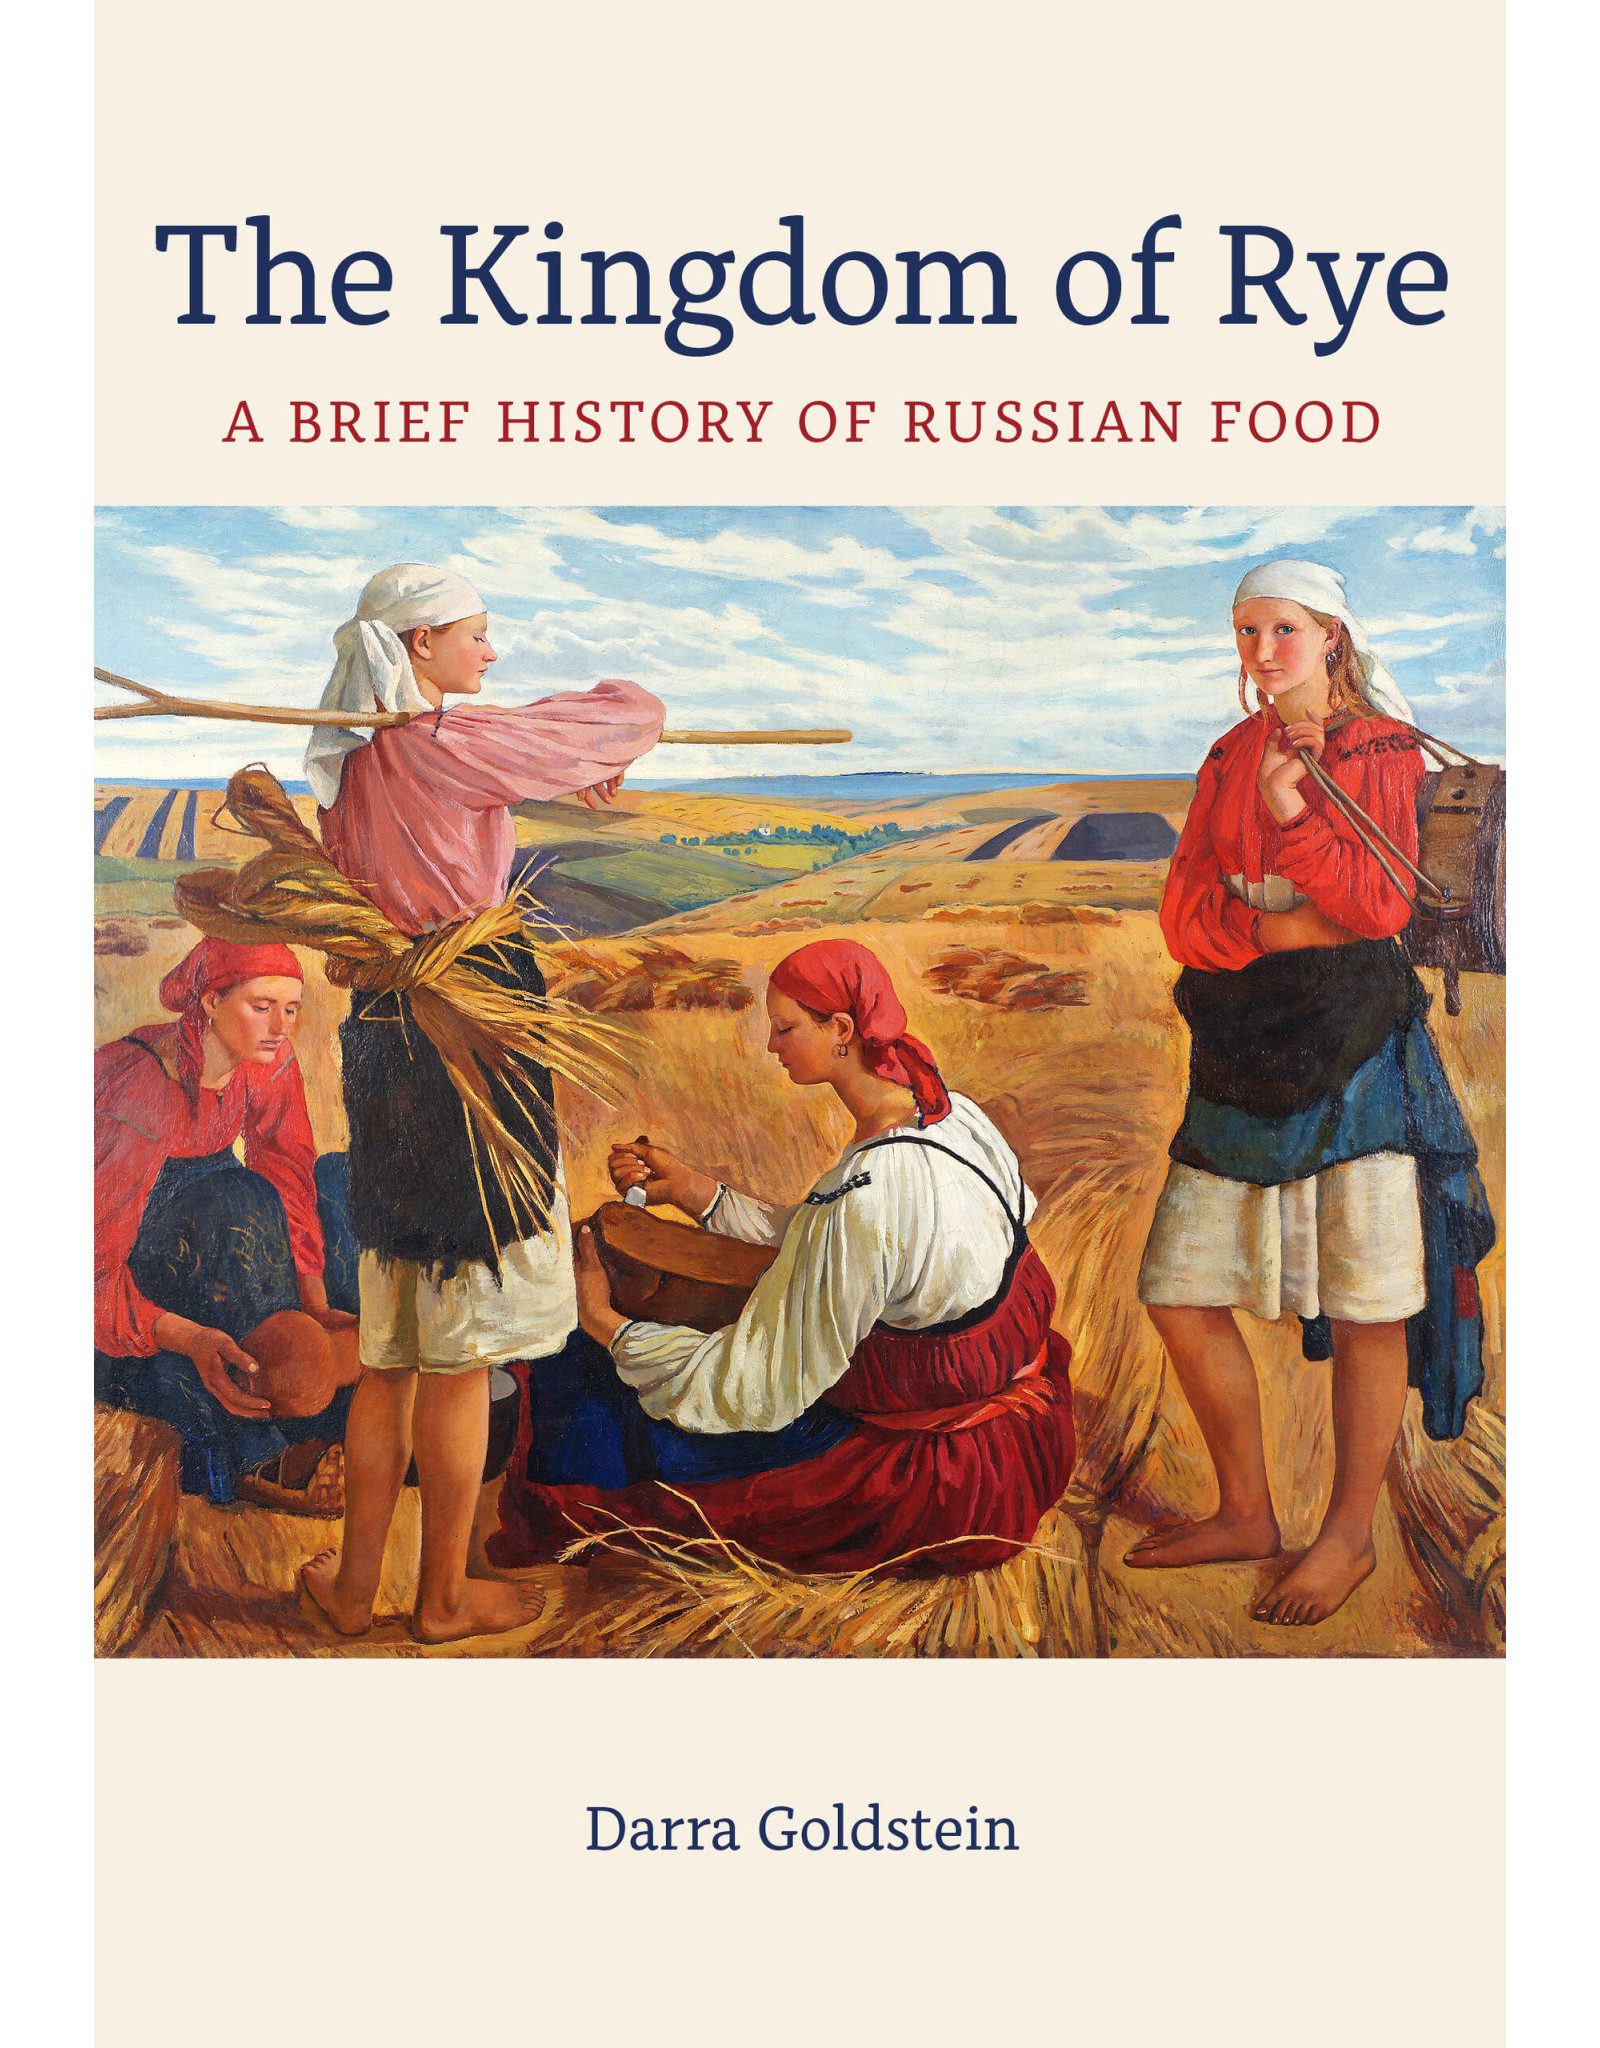 The Kingdom of Rye